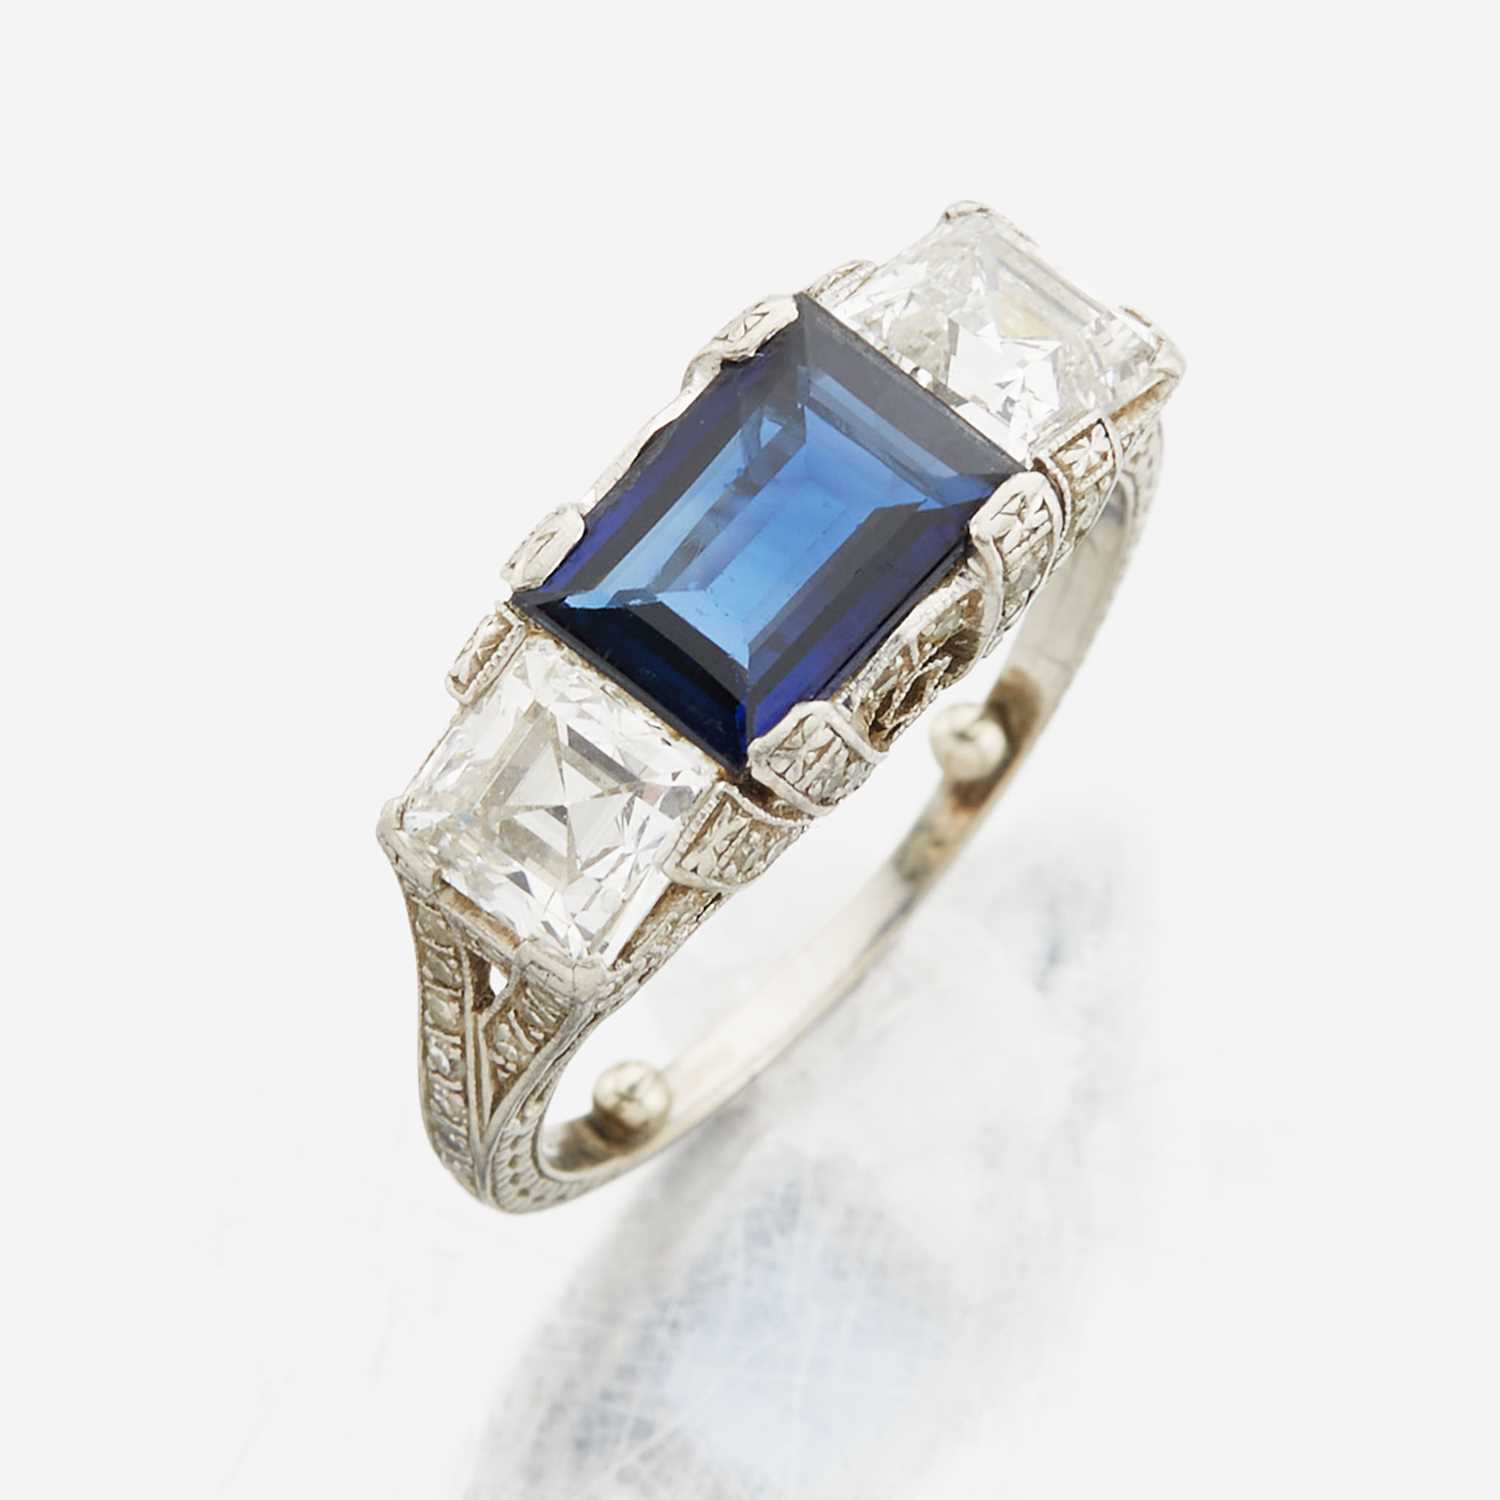 Lot 15 - An Edwardian sapphire, diamond, and platinum ring